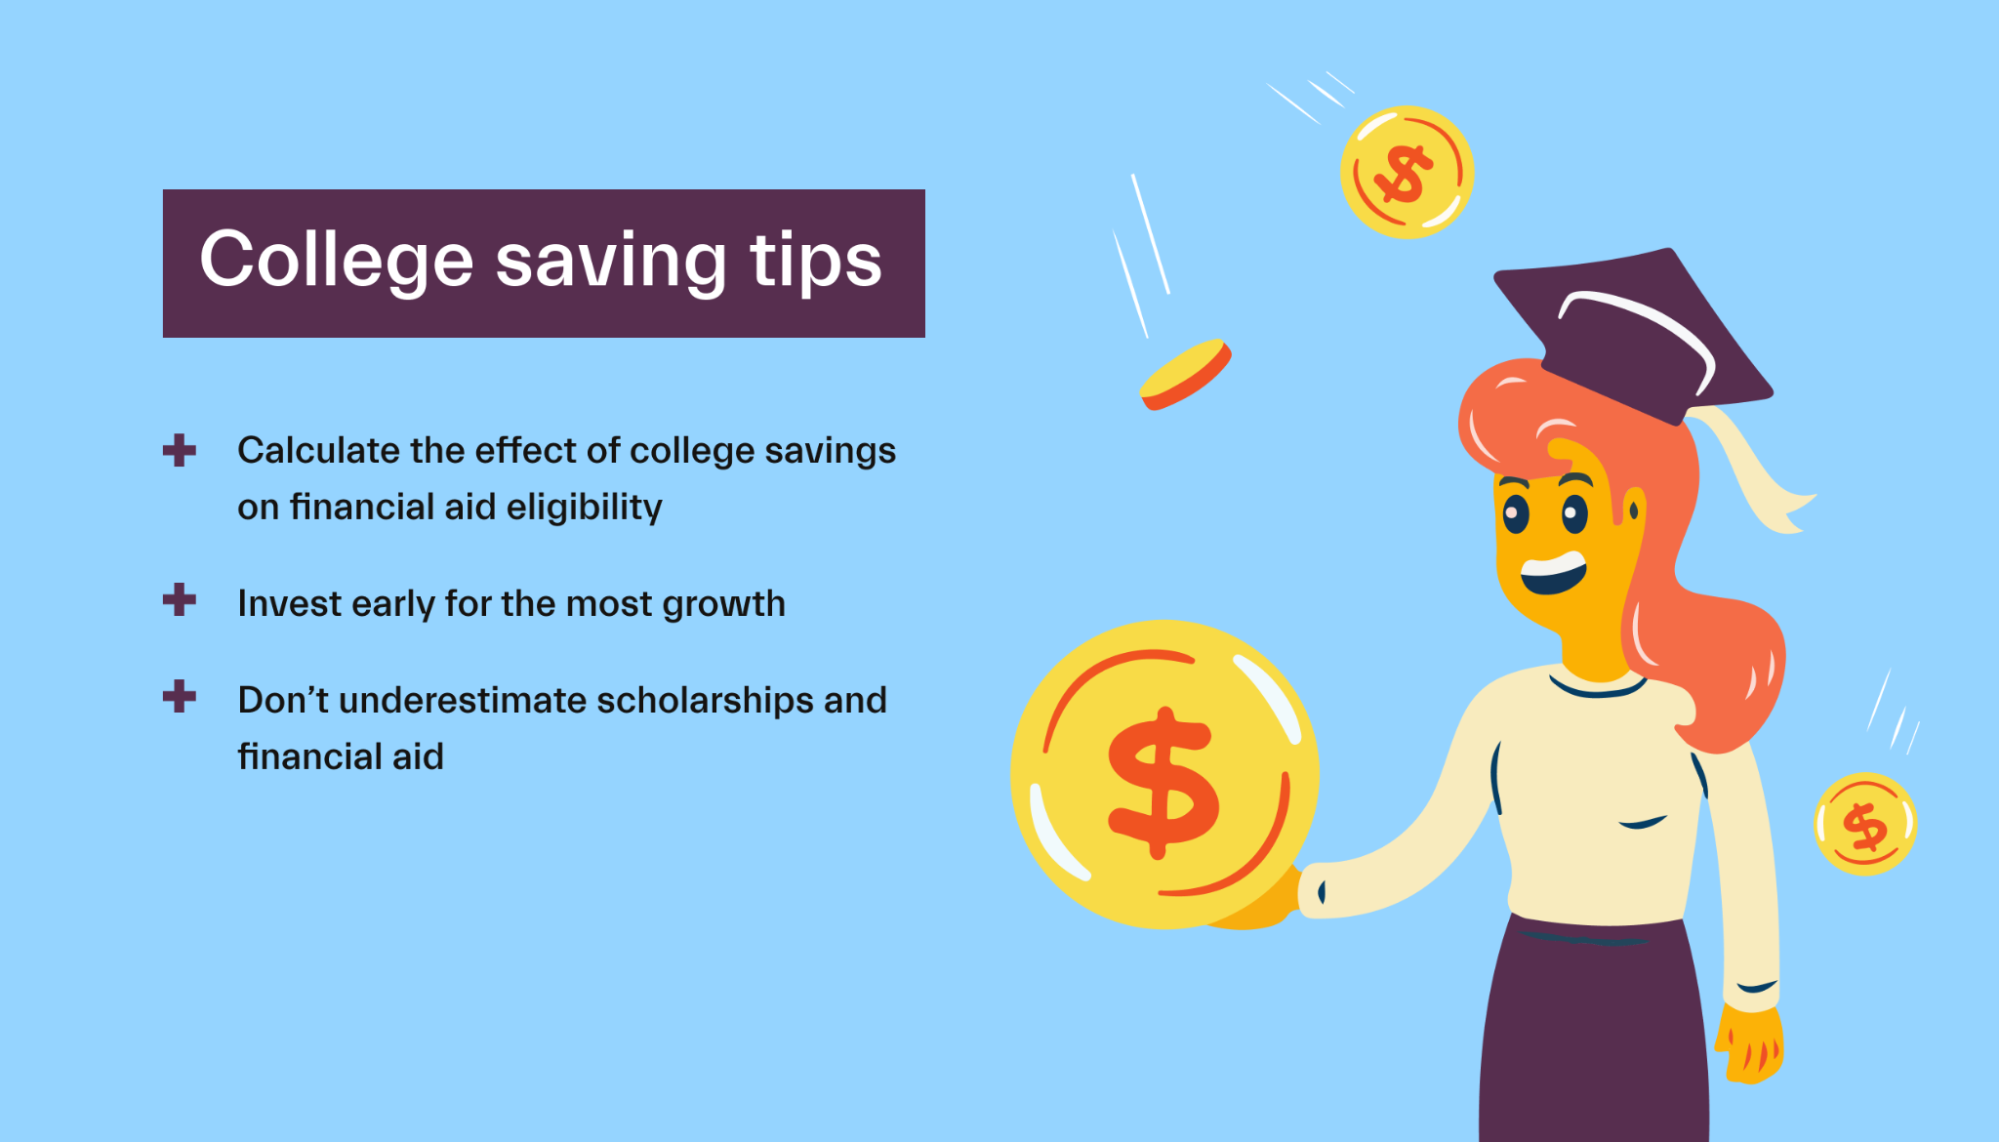 College saving tips